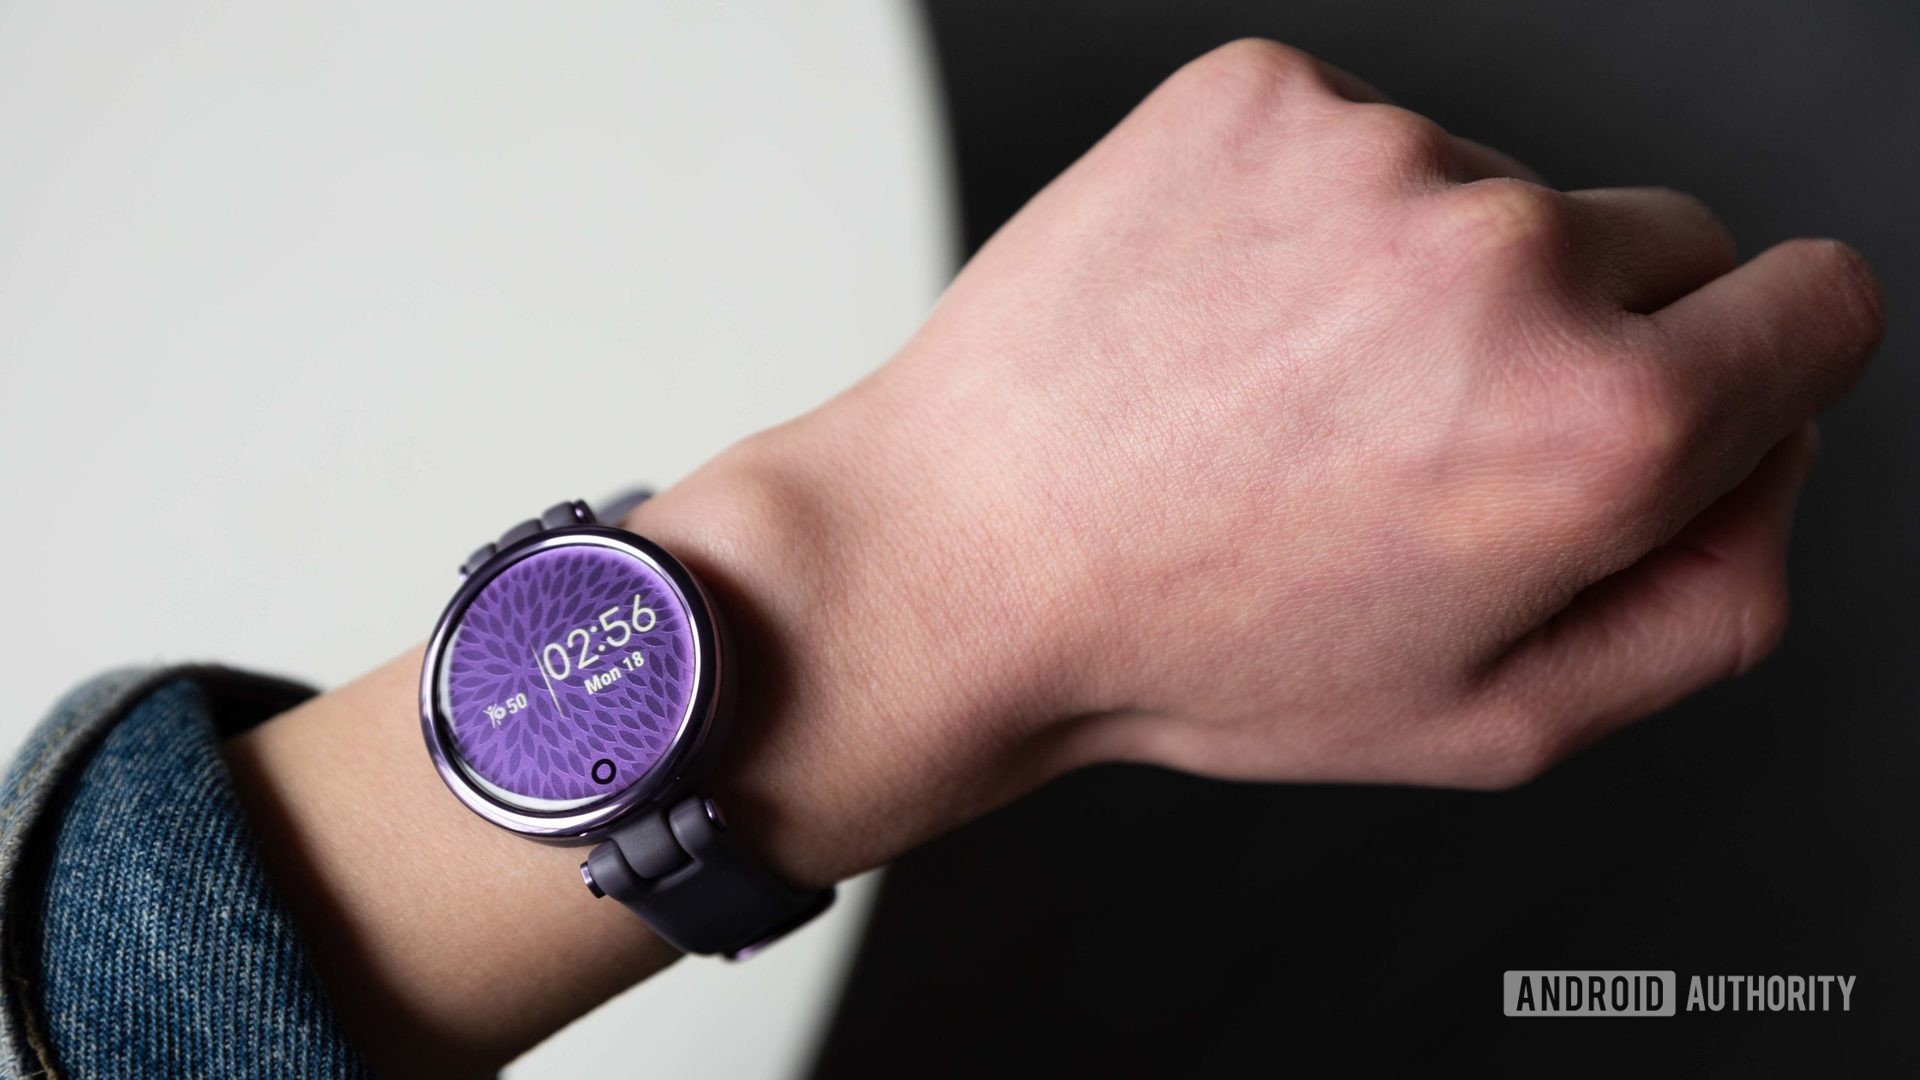 Garmin Lily®  Classic Smartwatch for Women